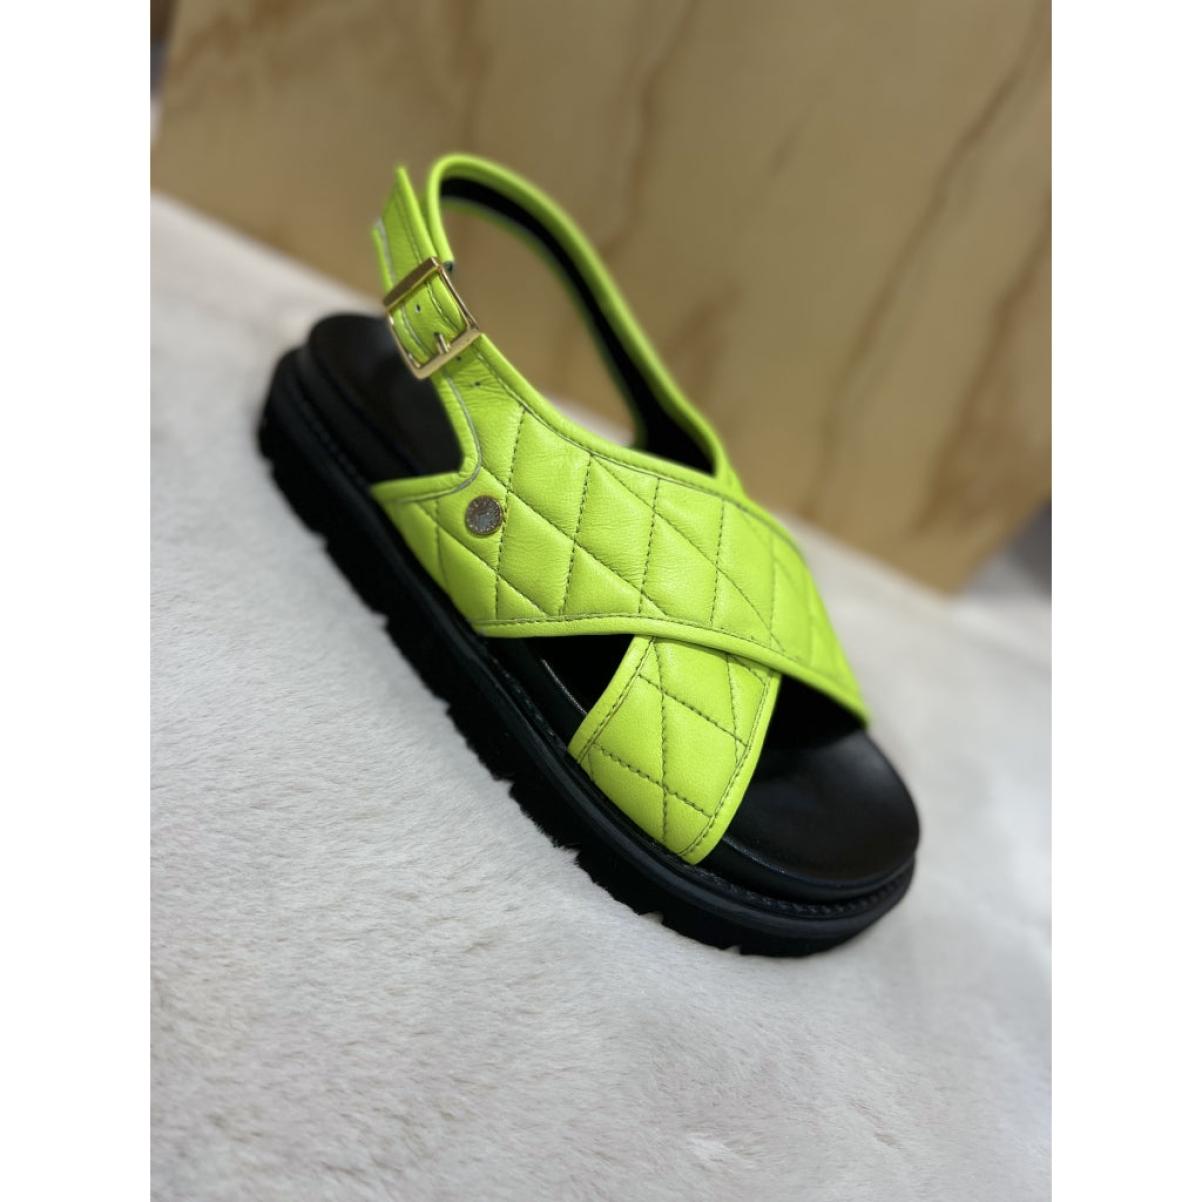 Specialized Sandals Copenhagen Shoes Women Going Wild Neon - Neon Green - 2